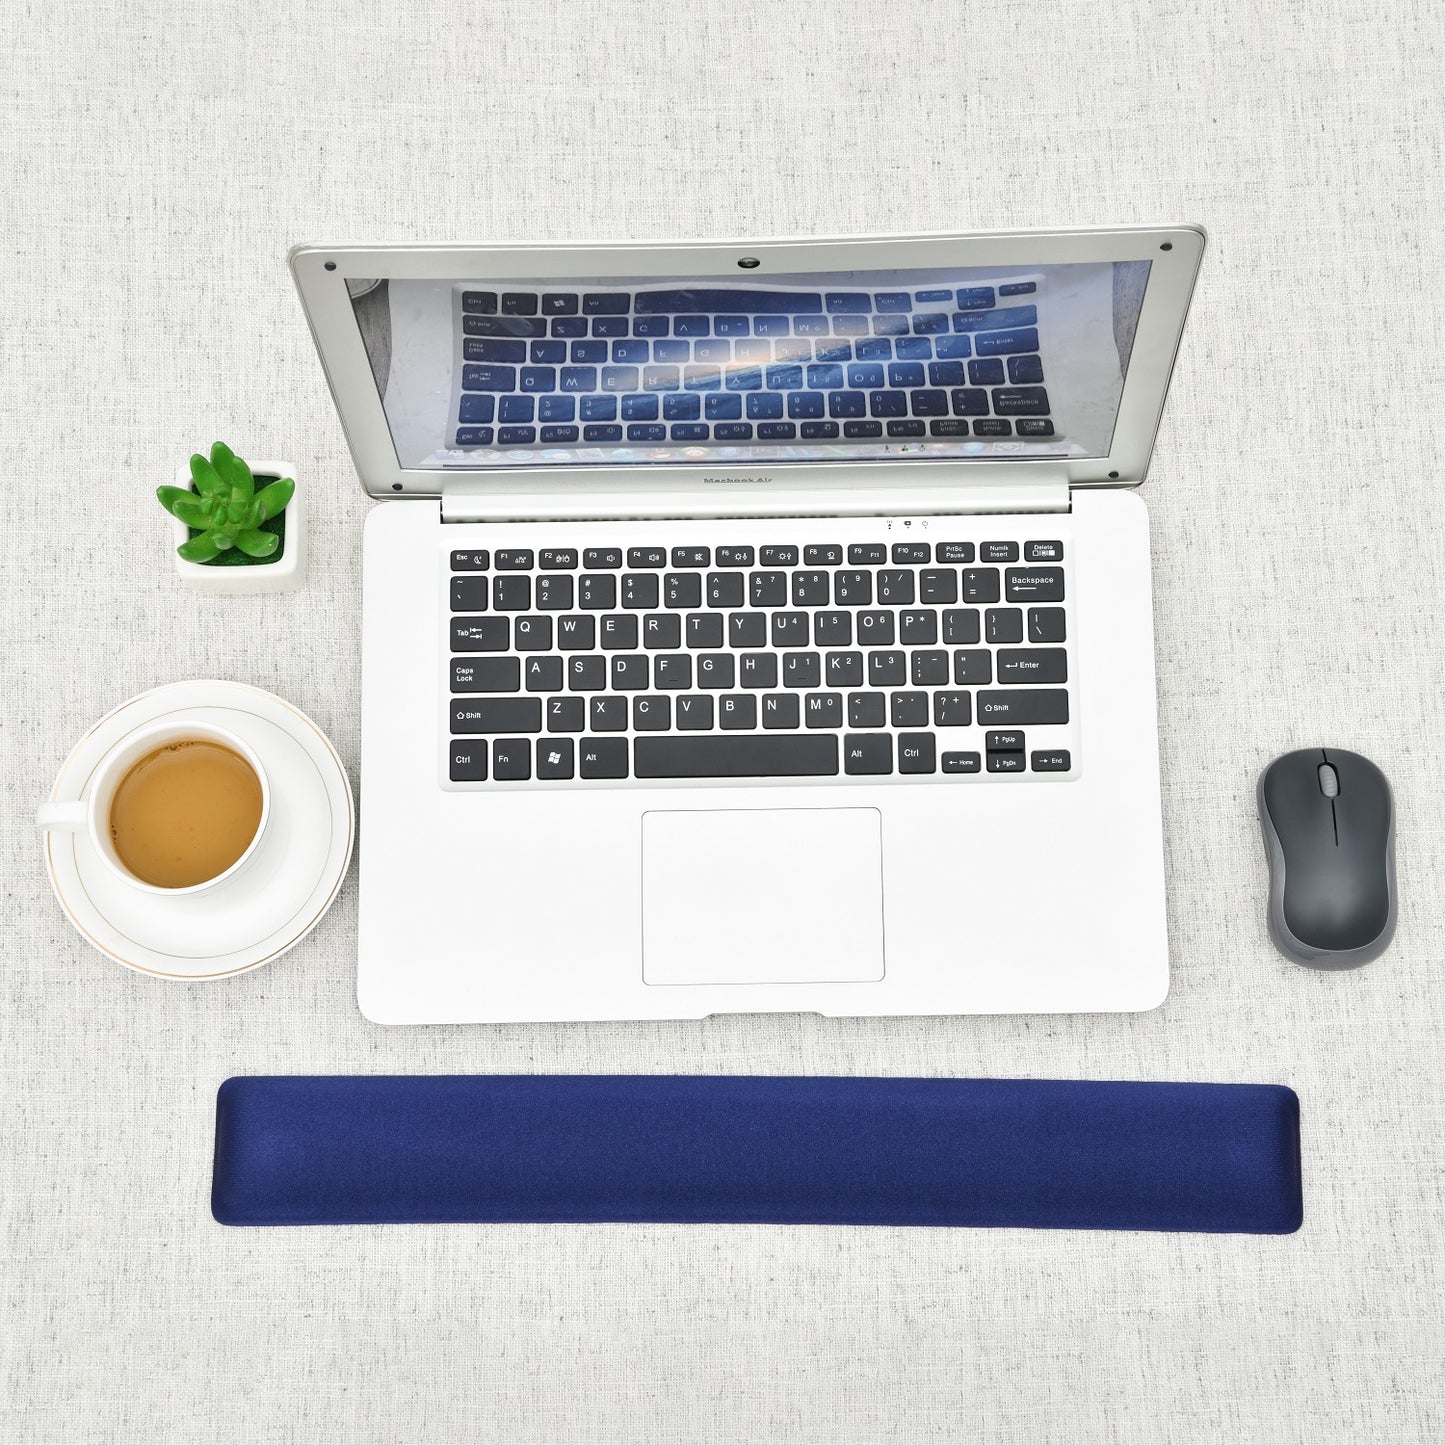 DAC® MP-128 Super-Gel™ Straight Edge Keyboard Palm Support, Blue